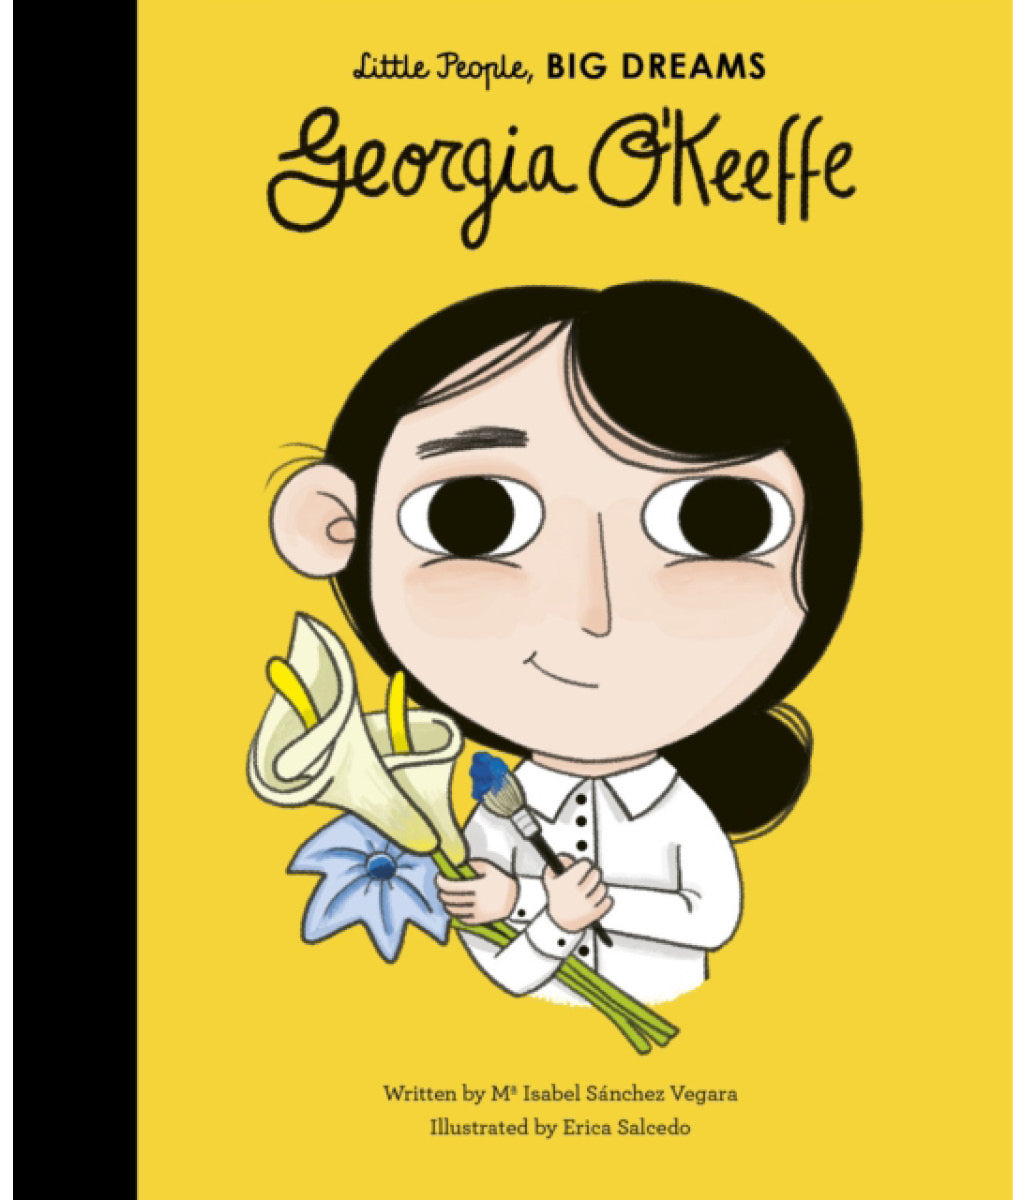 Georgia O'keefe by Maria Isabel Sanchez Vegara